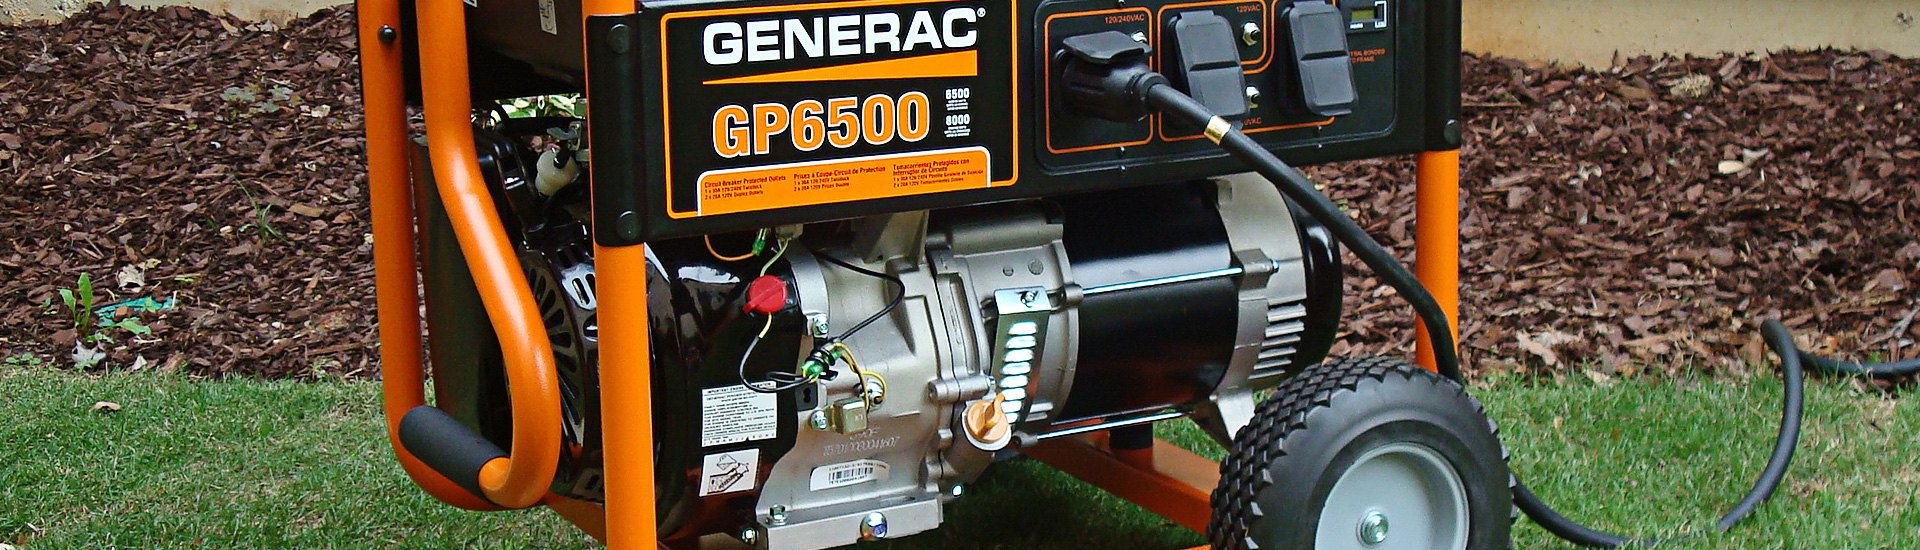 mi-t-m generator 6500